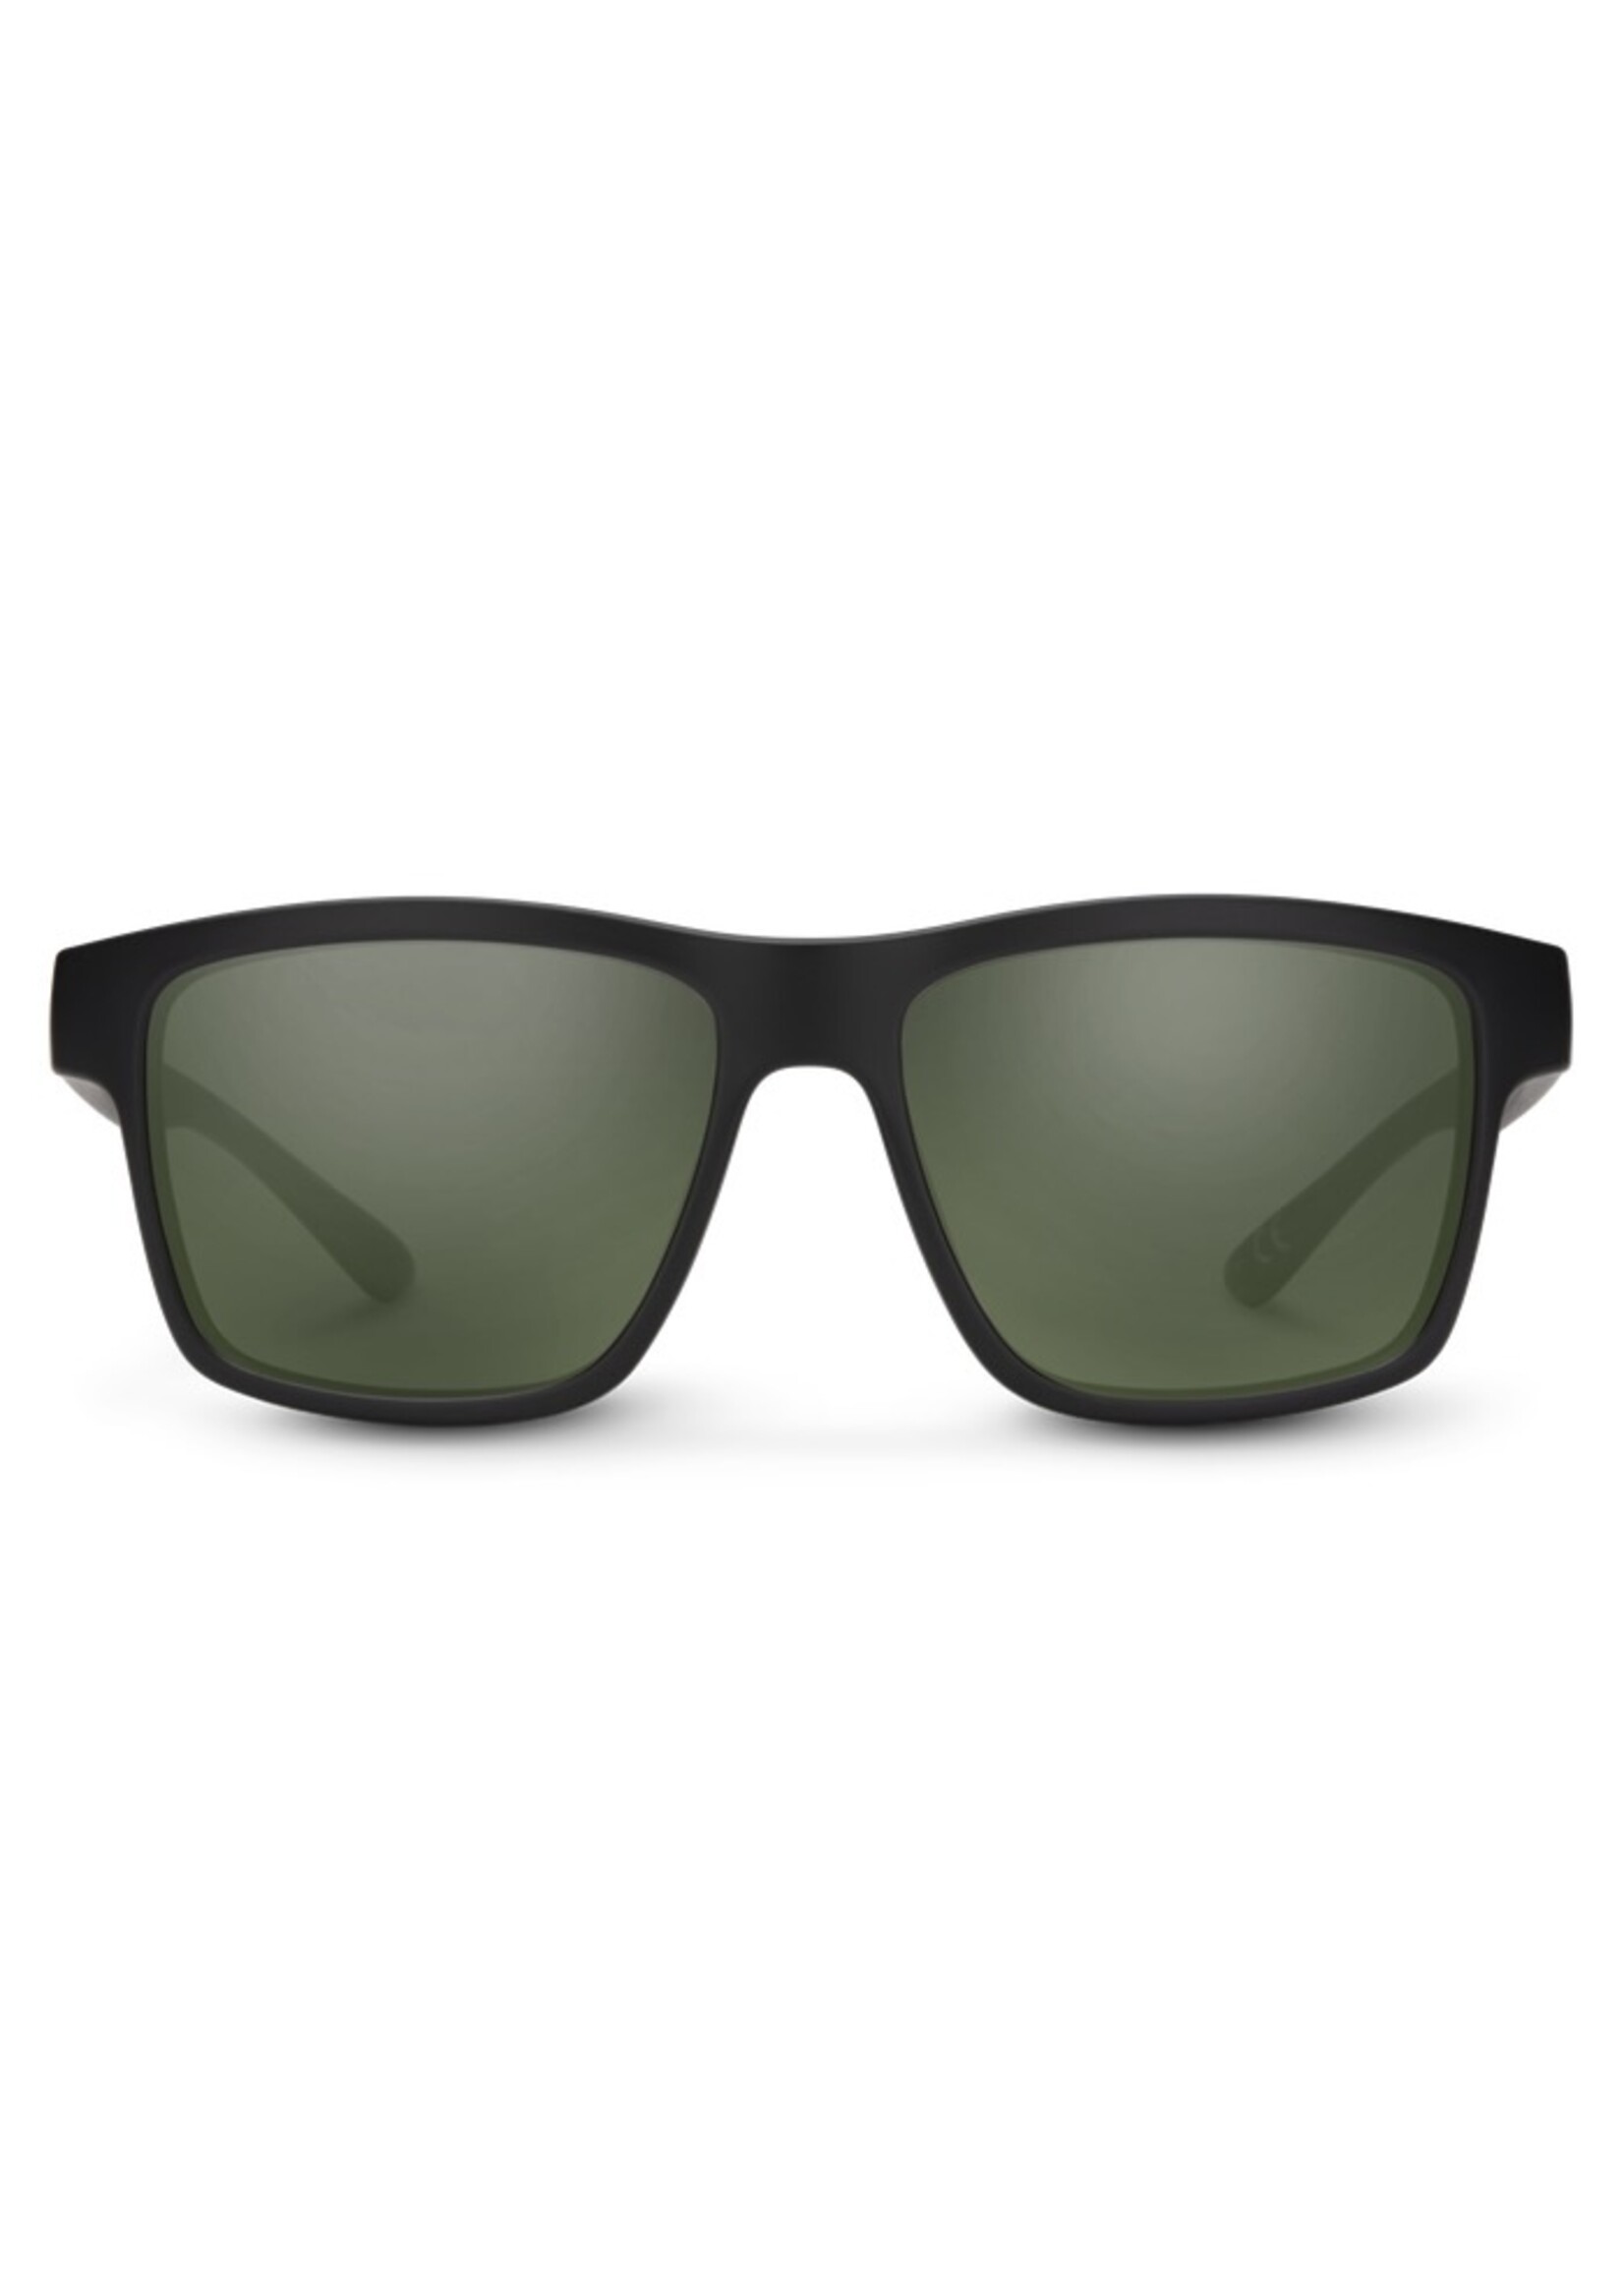 Suncloud A-Team Polarized Sunglasses Matte Black/Polar Gray Green